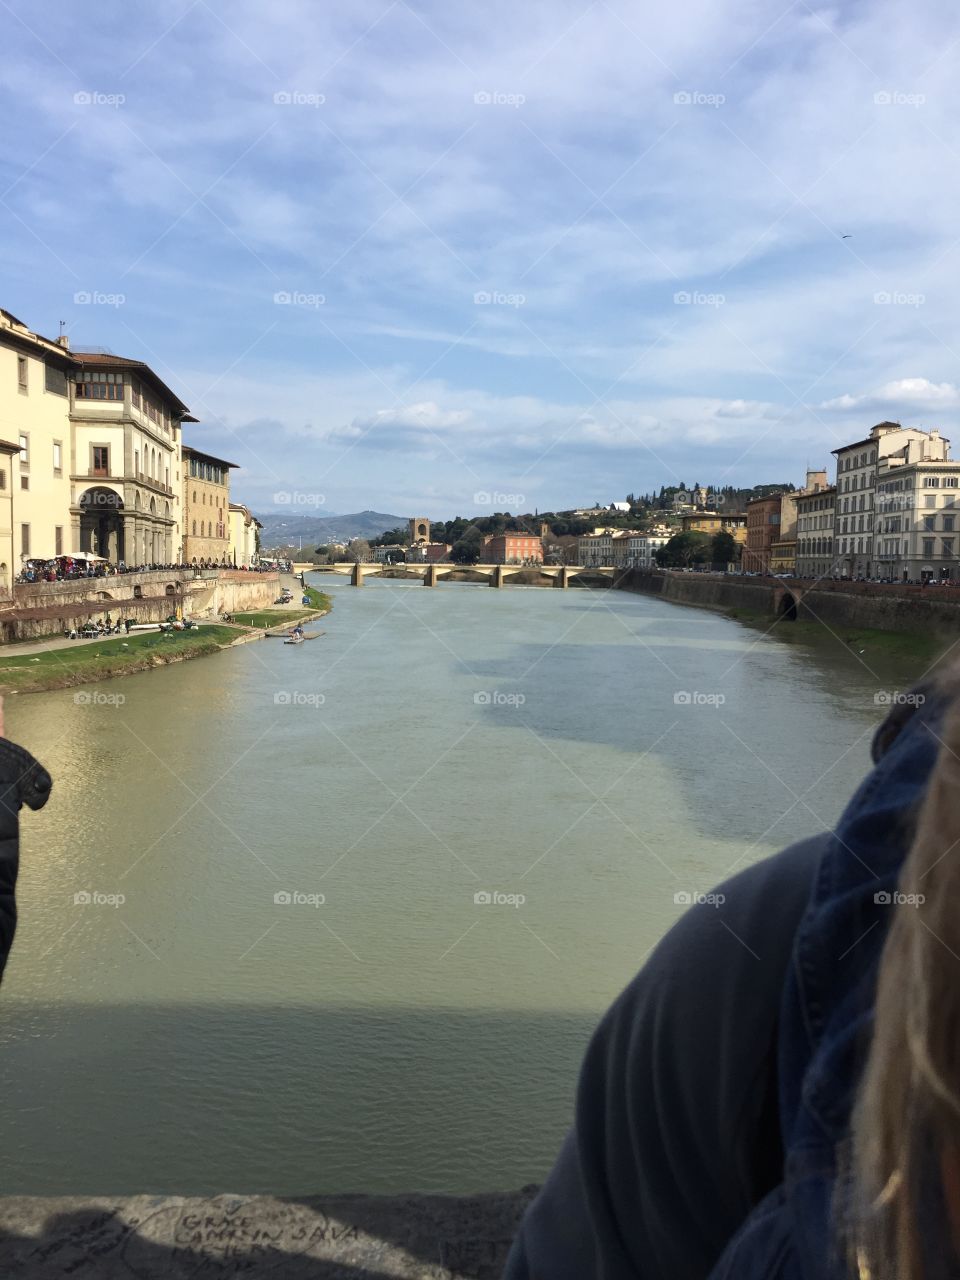 Arno River Running through Florence, Italy